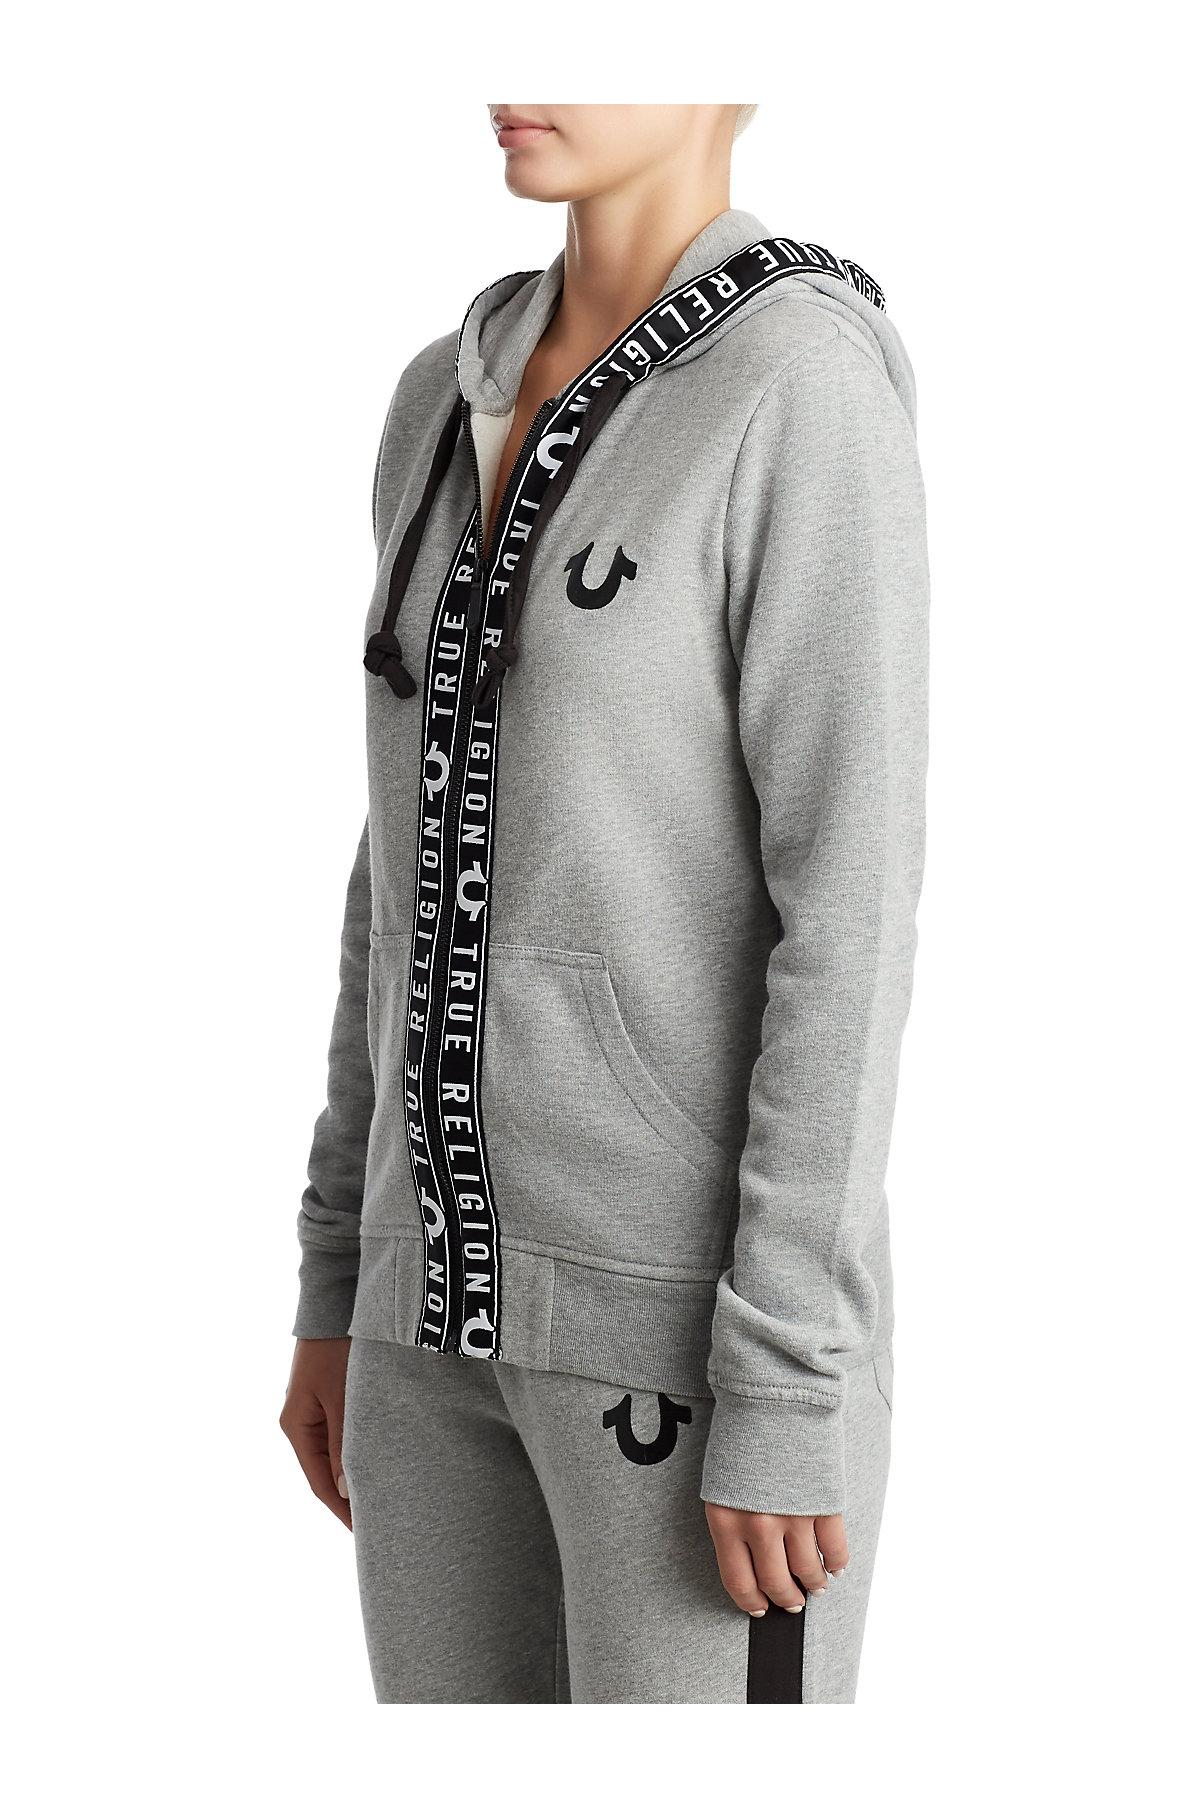 true religion tape zip up hoodie